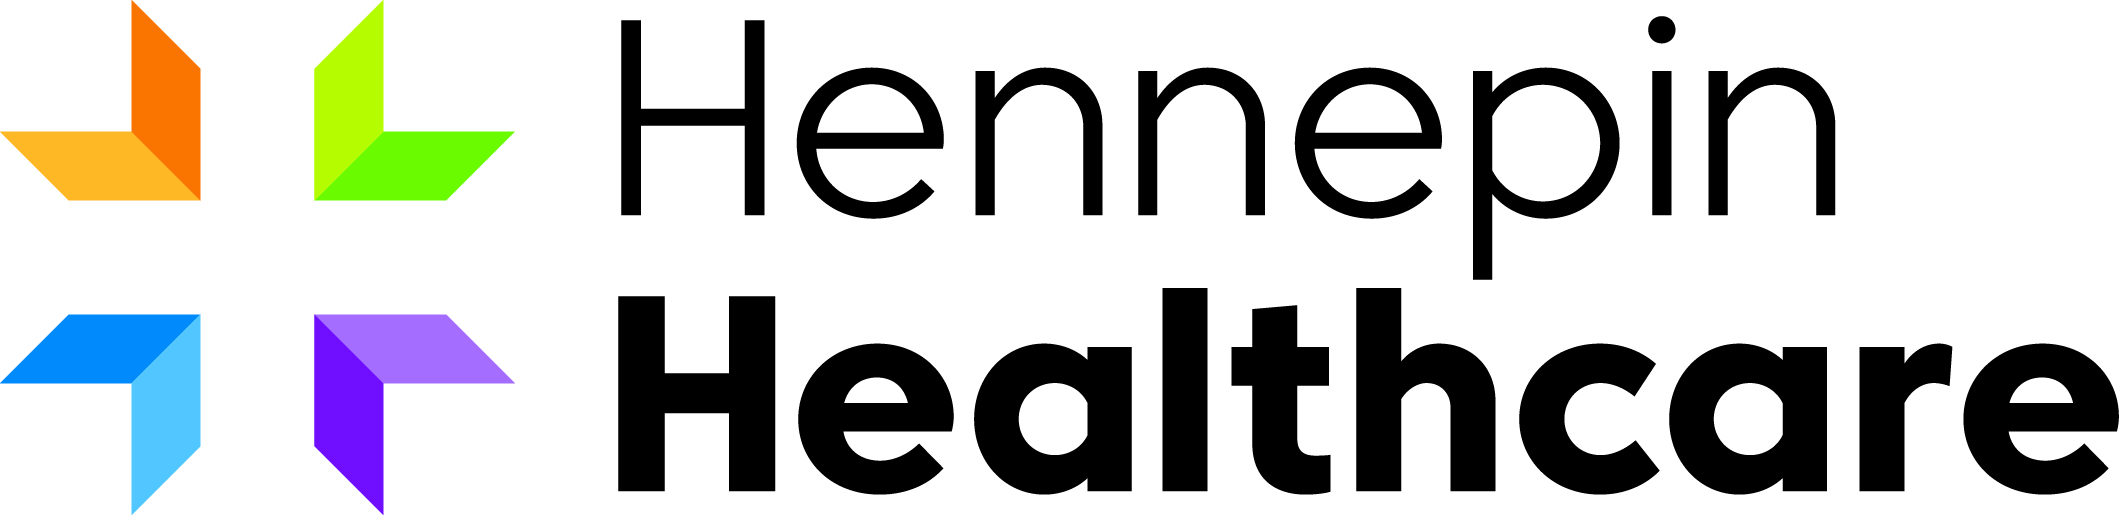 Hennepin Healthcare TMS Service